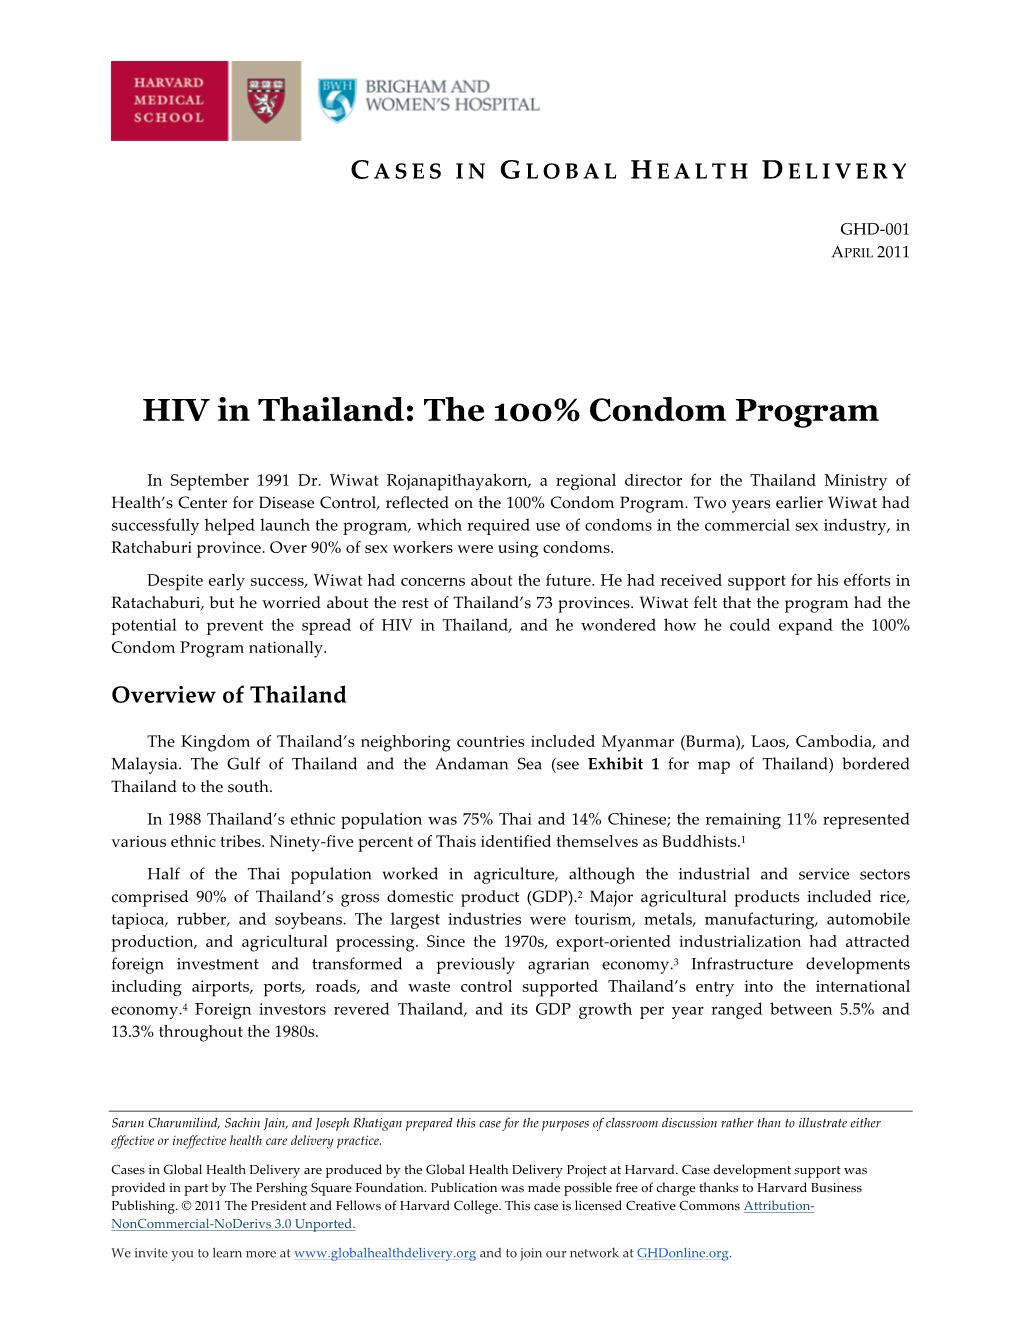 GHD-001 HIV in Thailand Condom Campaign